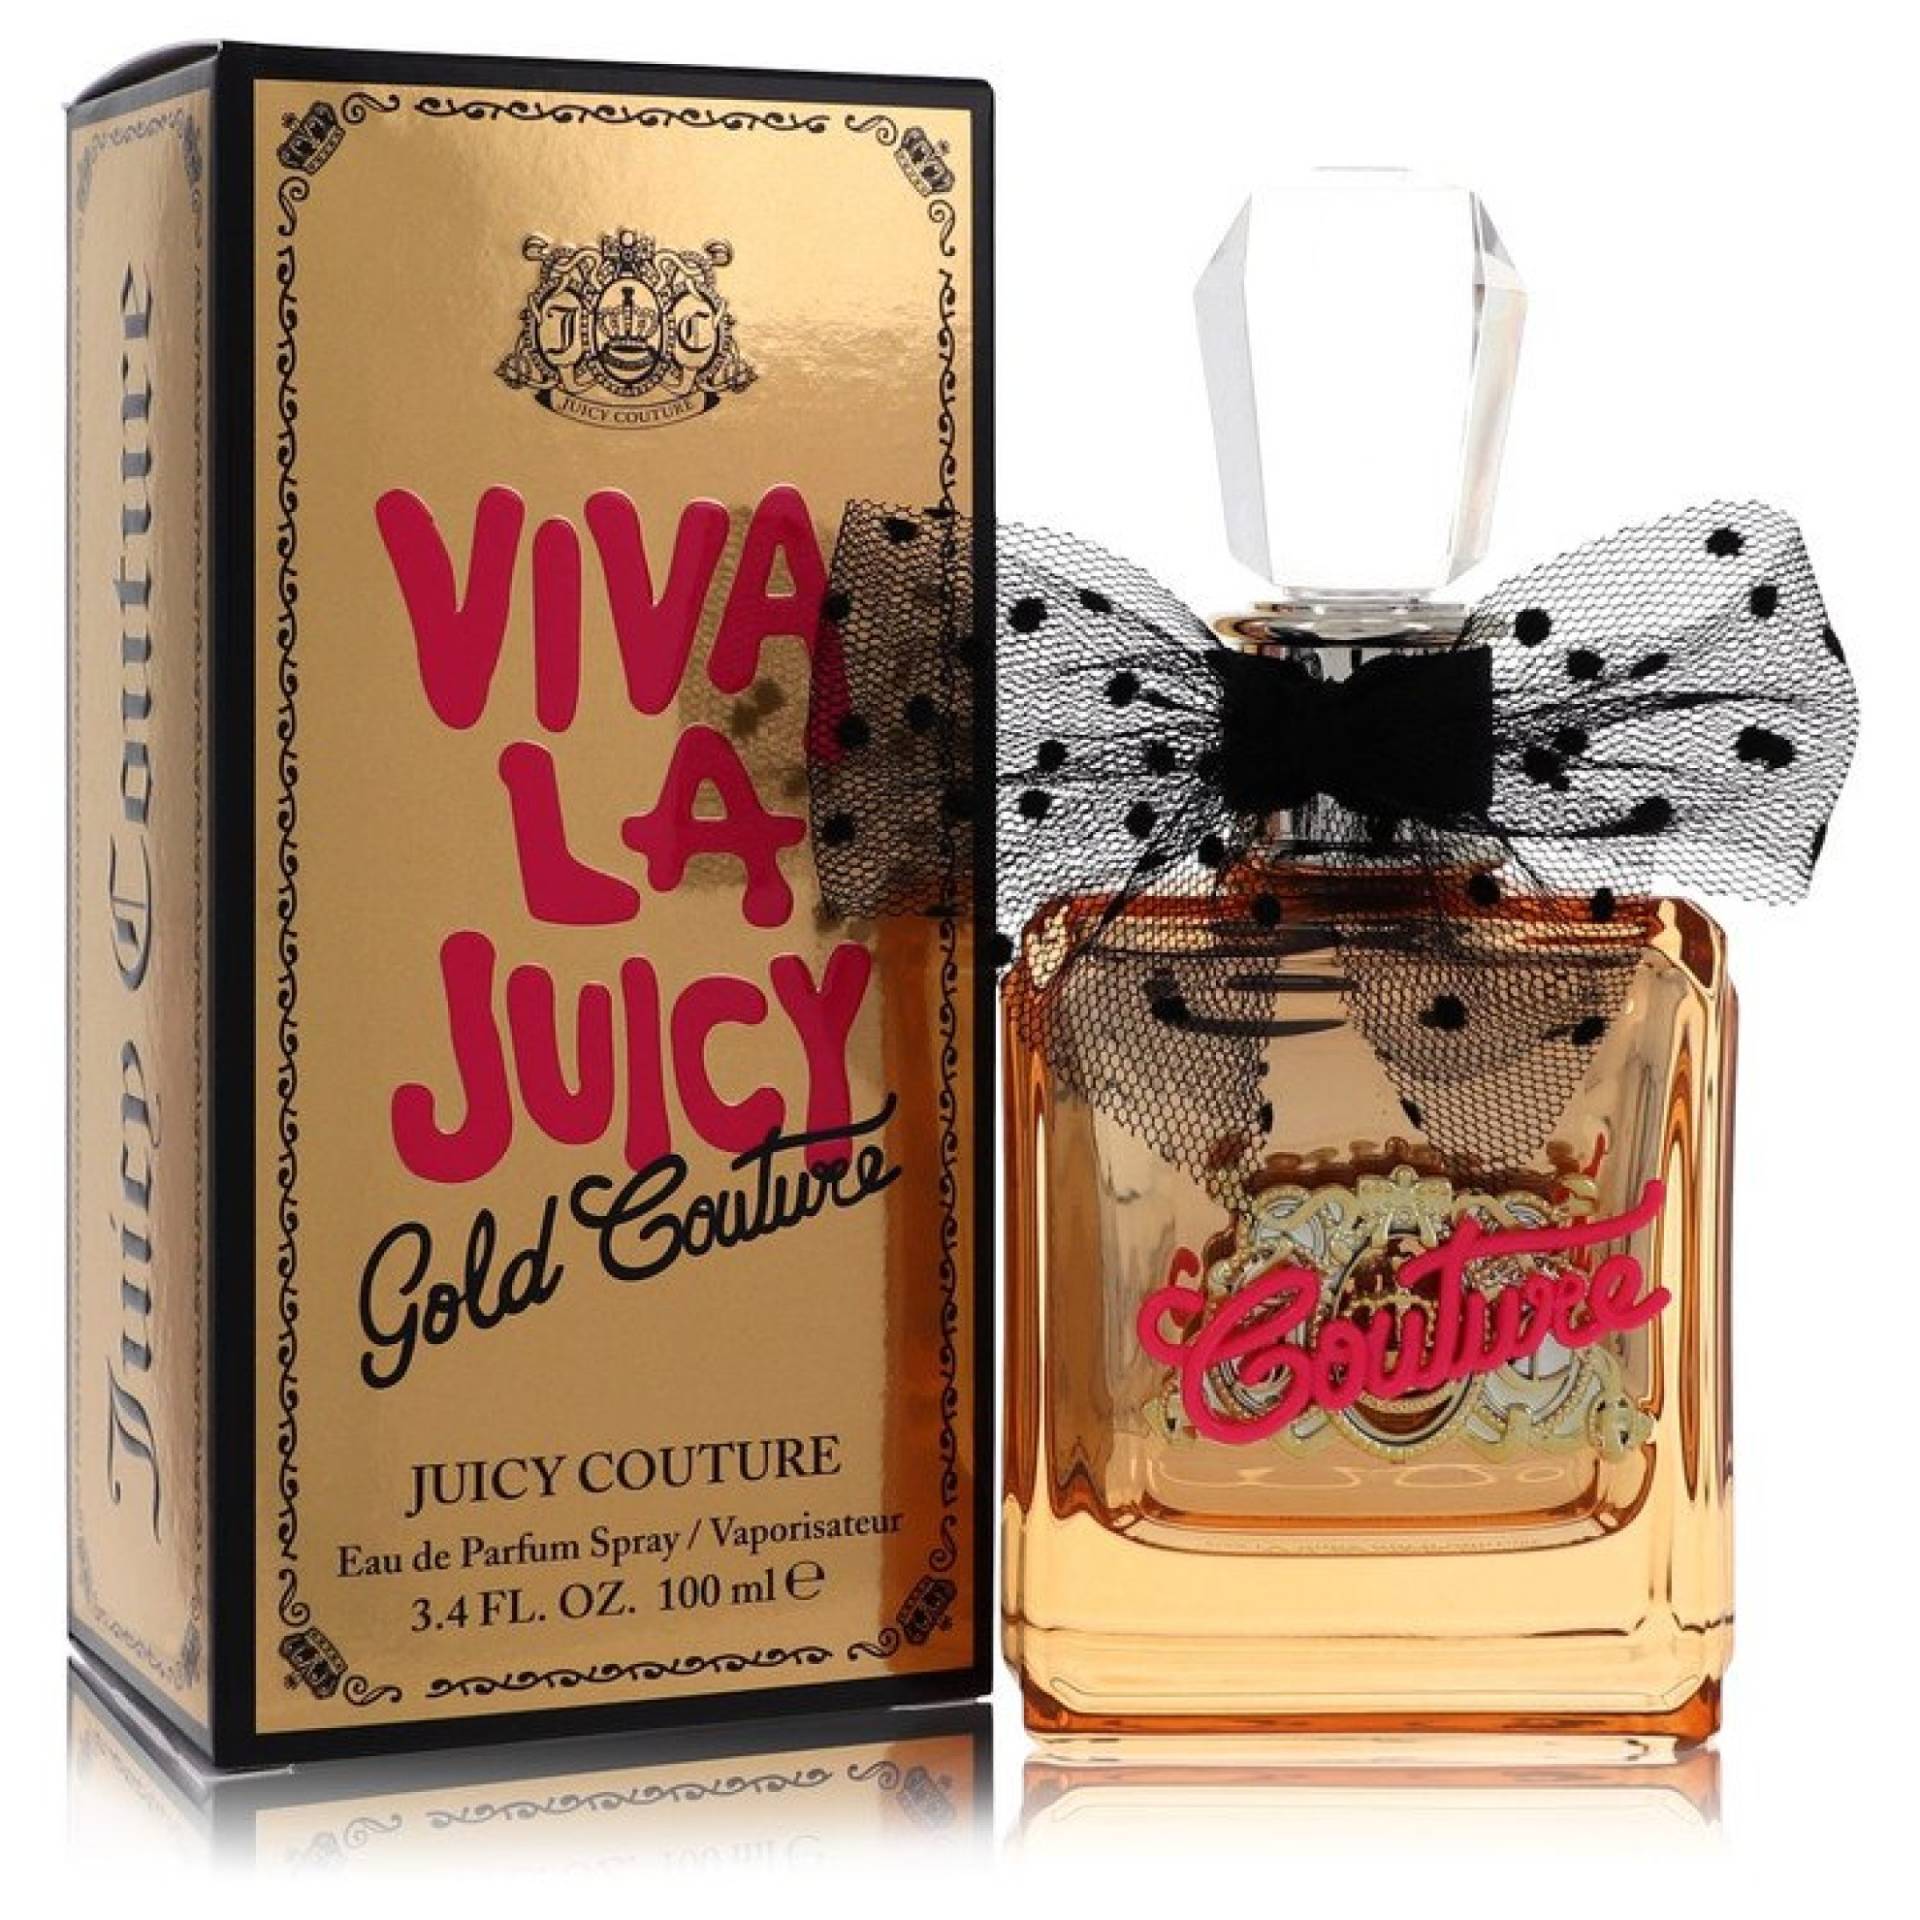 Juicy Couture Viva La Juicy Gold Couture Eau De Parfum Spray 100 ml von Juicy Couture